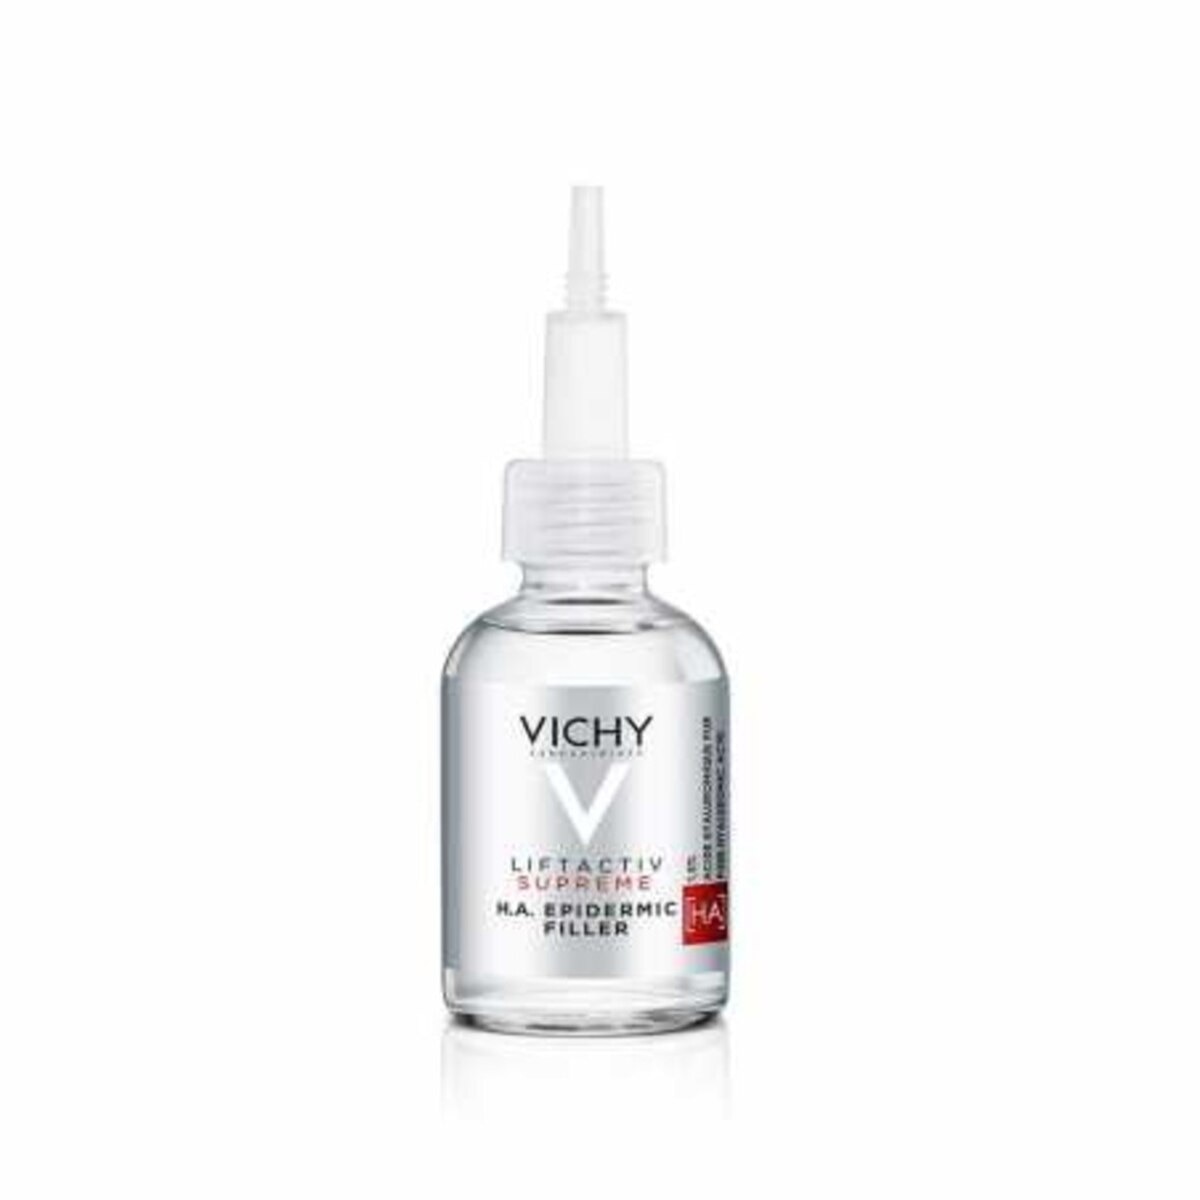 Serum Facial Vichy Liftactiv Supreme H.A. Epidermic Filler 30ml